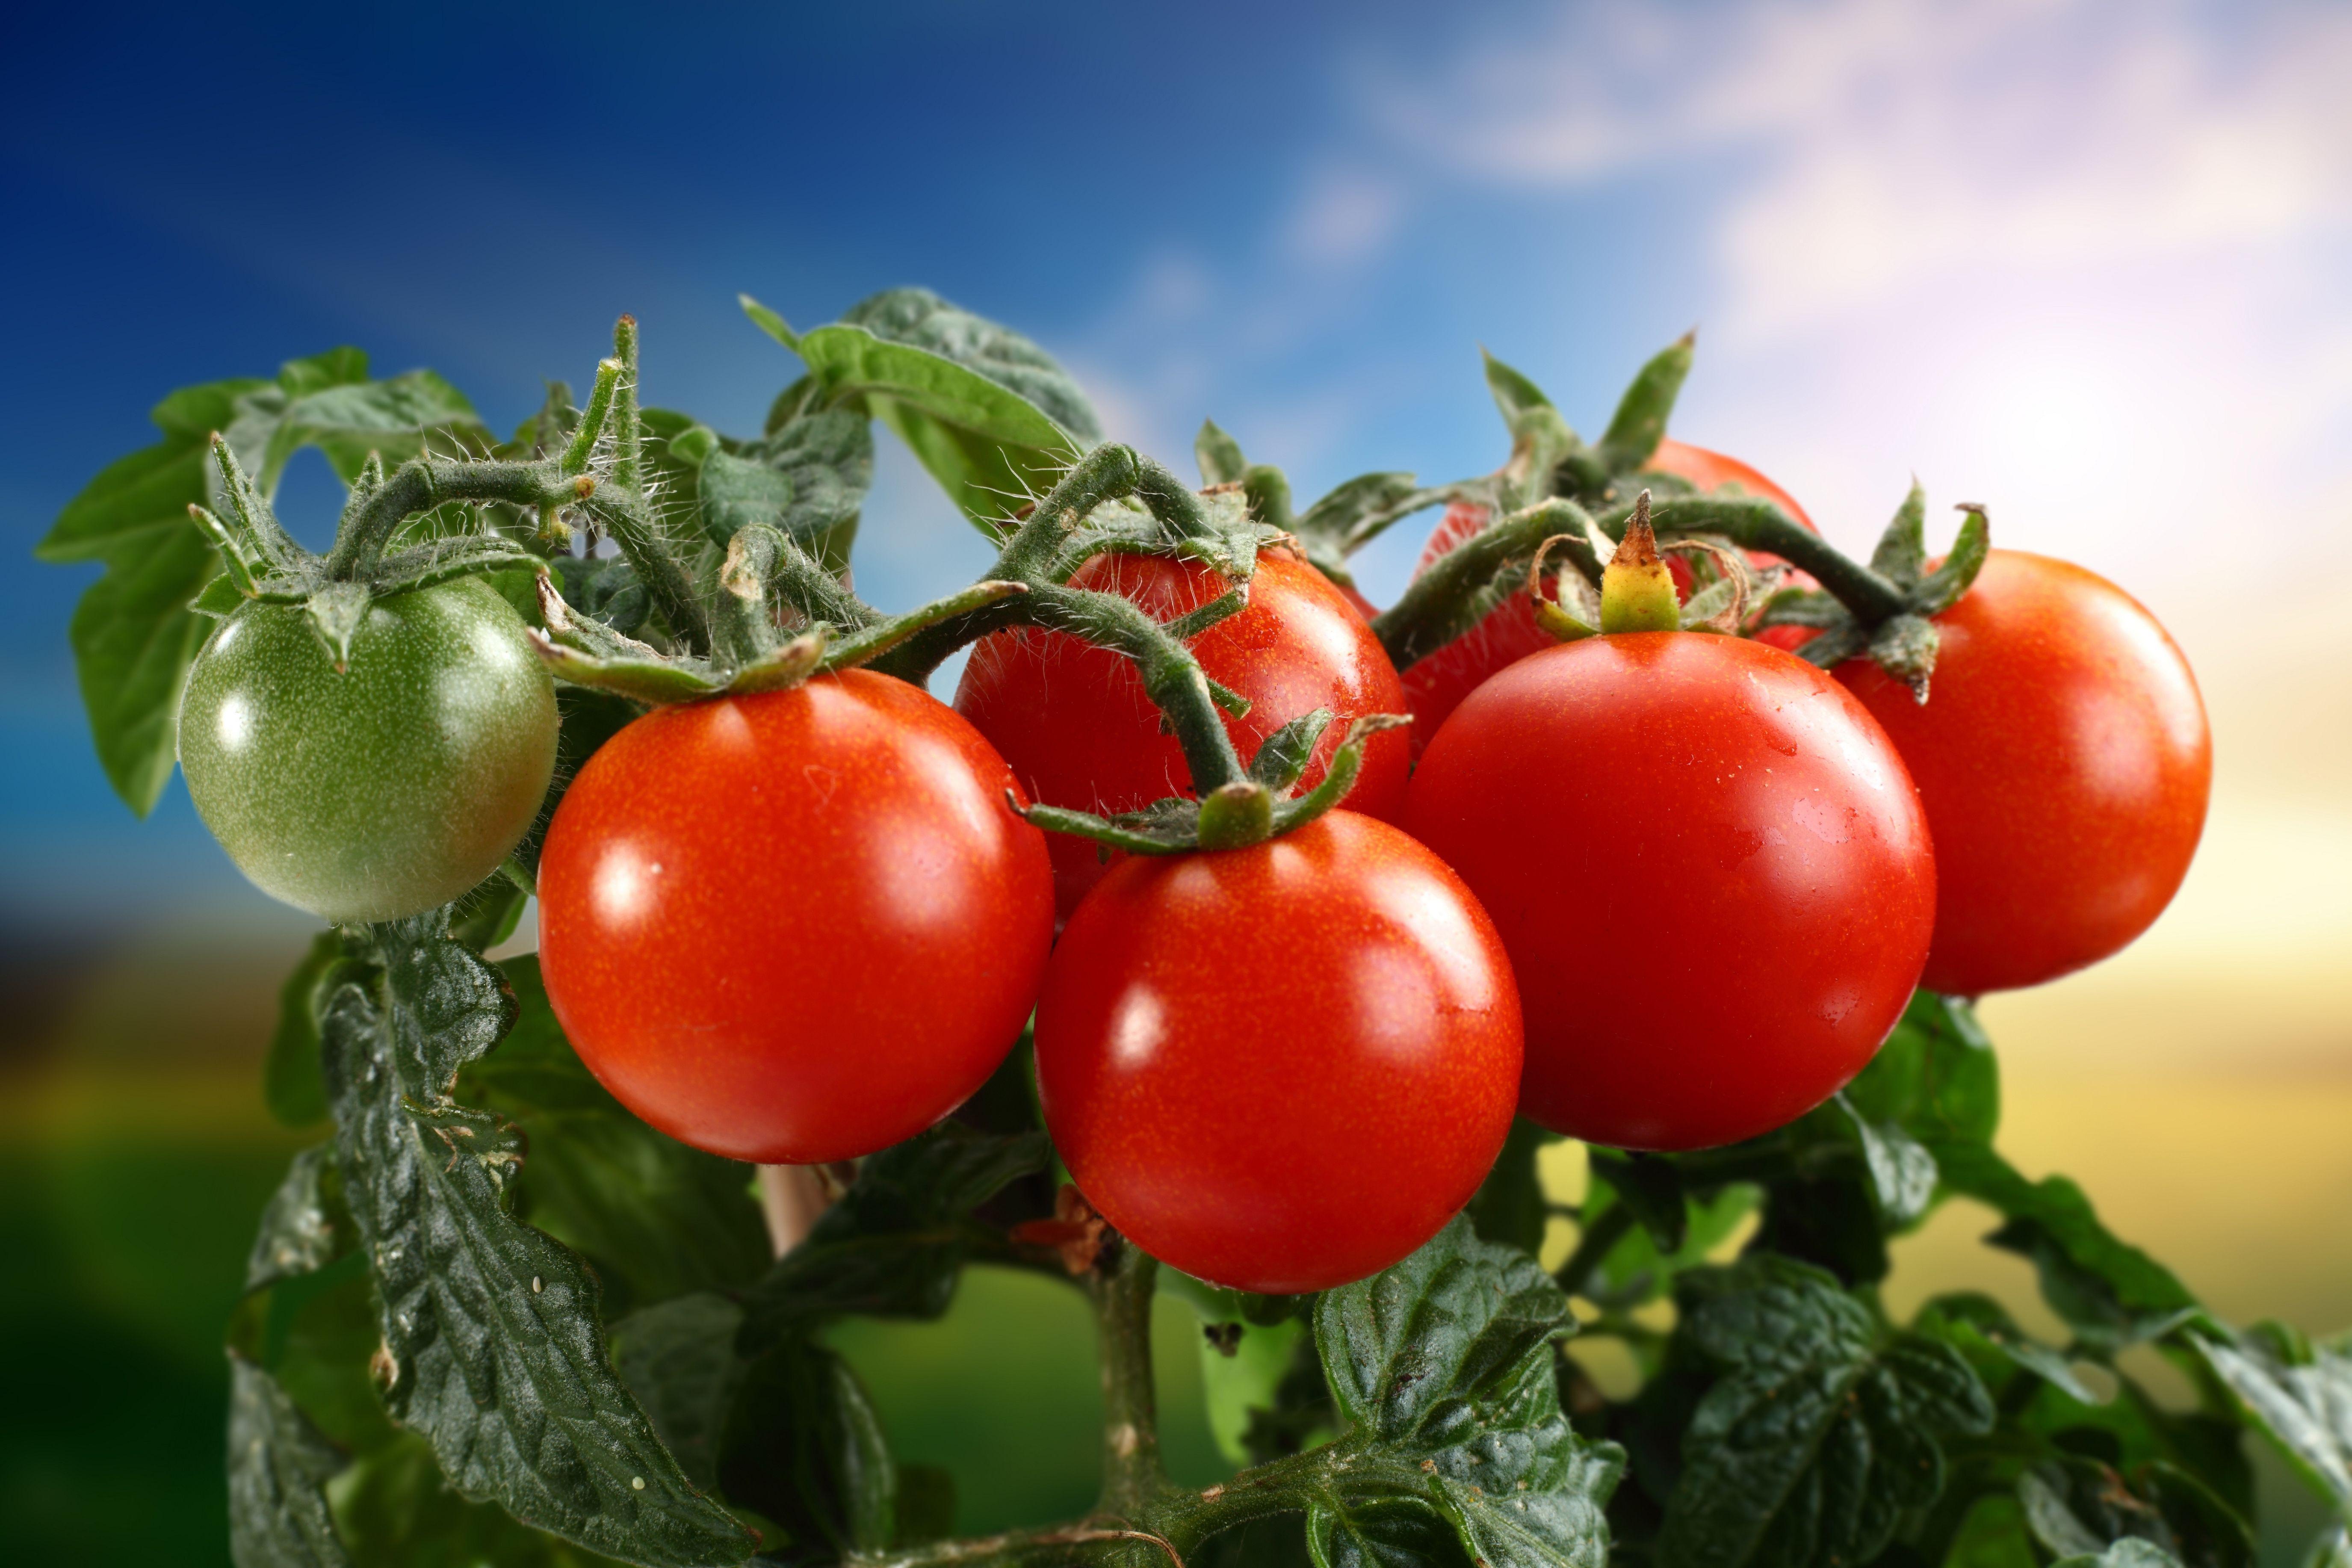 Tomato Wallpaper Image Photo Picture Background